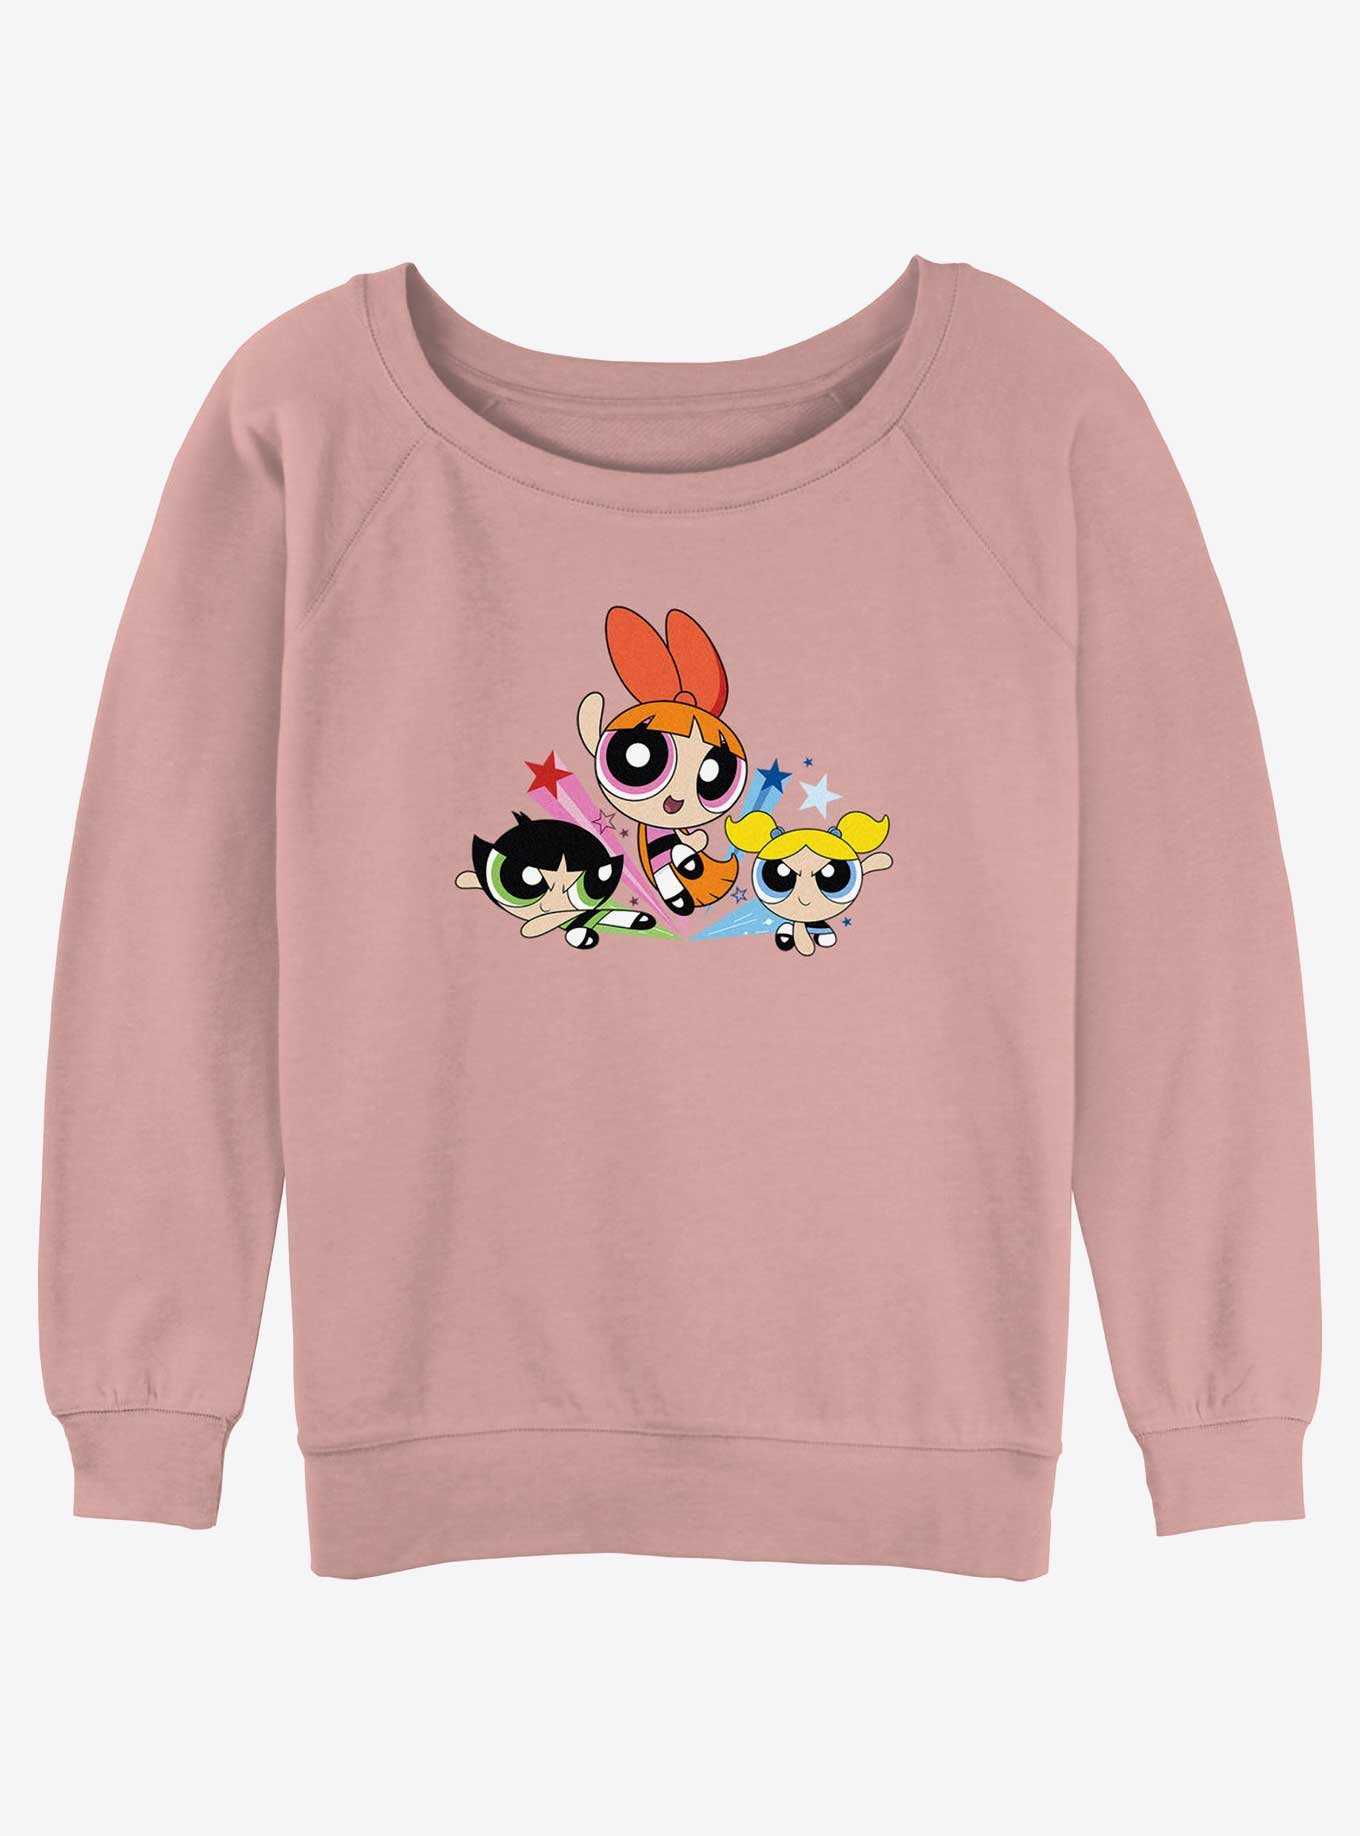 Cartoon Network The Powerpuff Girls Blossom, Bubbles, and Buttercup Girls Slouchy Sweatshirt, , hi-res